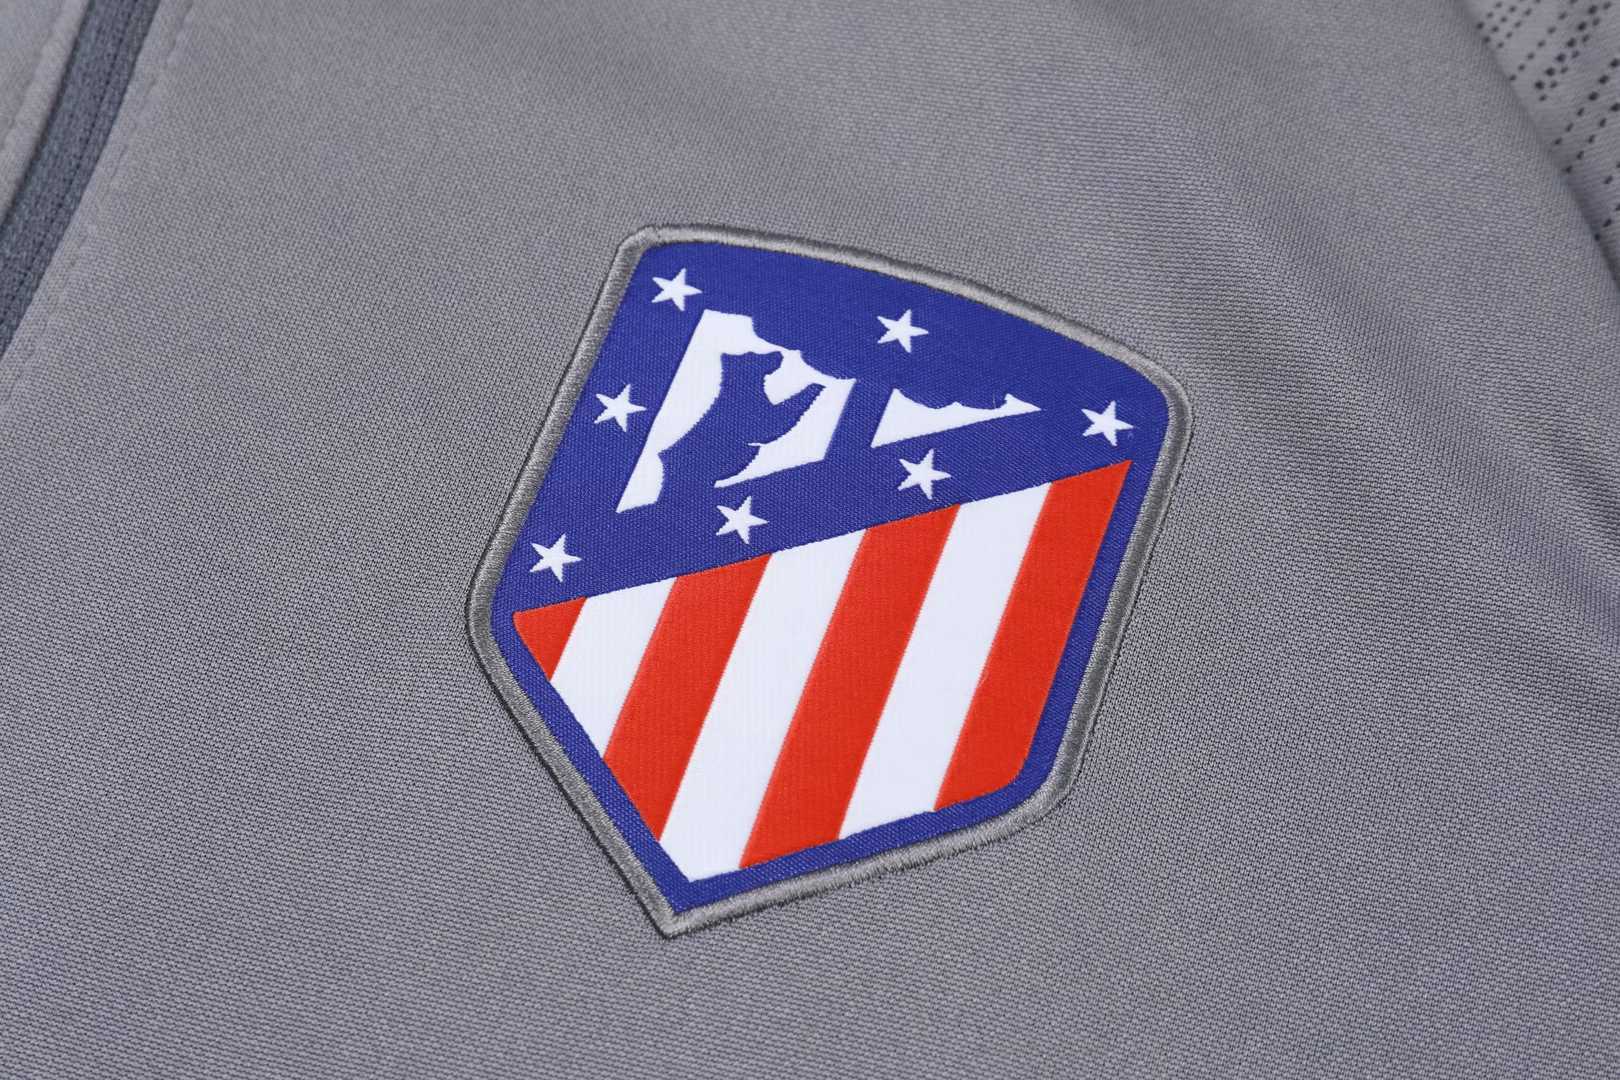 2019/20 Atletico Madrid Half Zip Grey Mens Soccer Training Suit(Jacket + Pants)